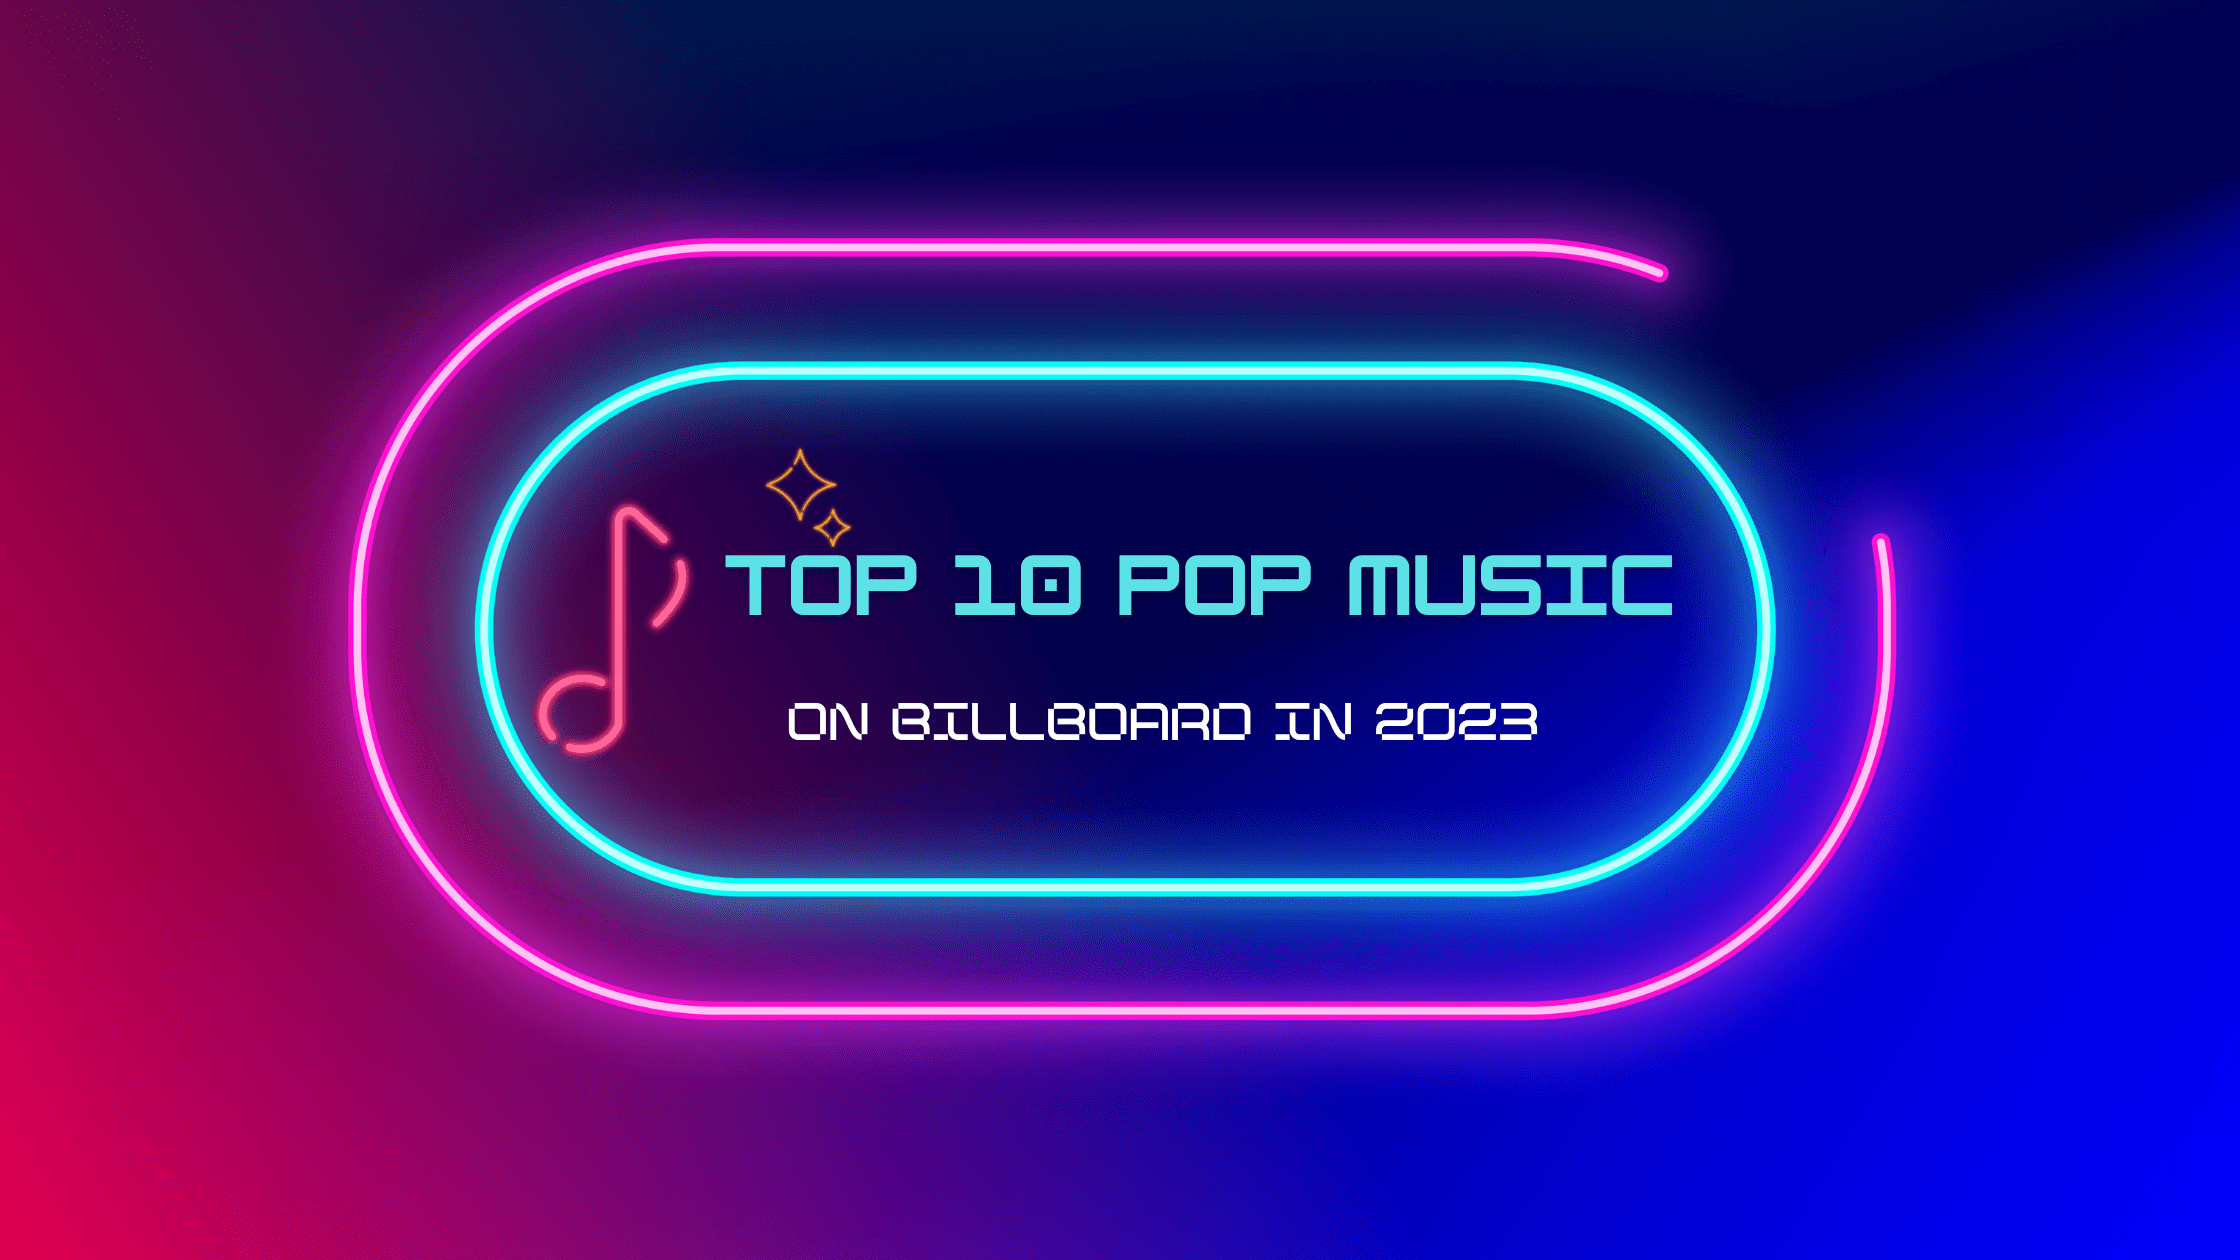 Top-10-Pop-Music-on-Billboard-in-September-2023.png